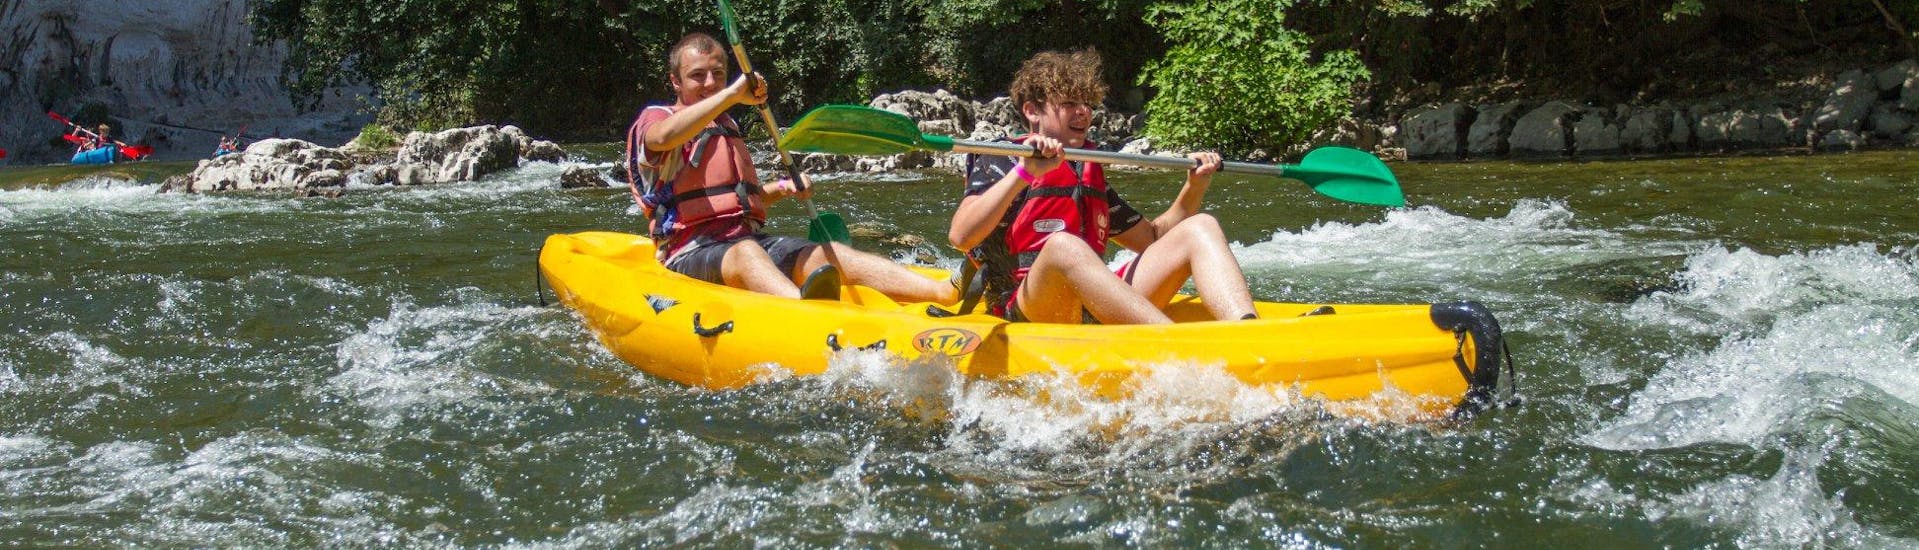 Kayak e canoa sull'Ardèche 12 km - Maxi Tour.